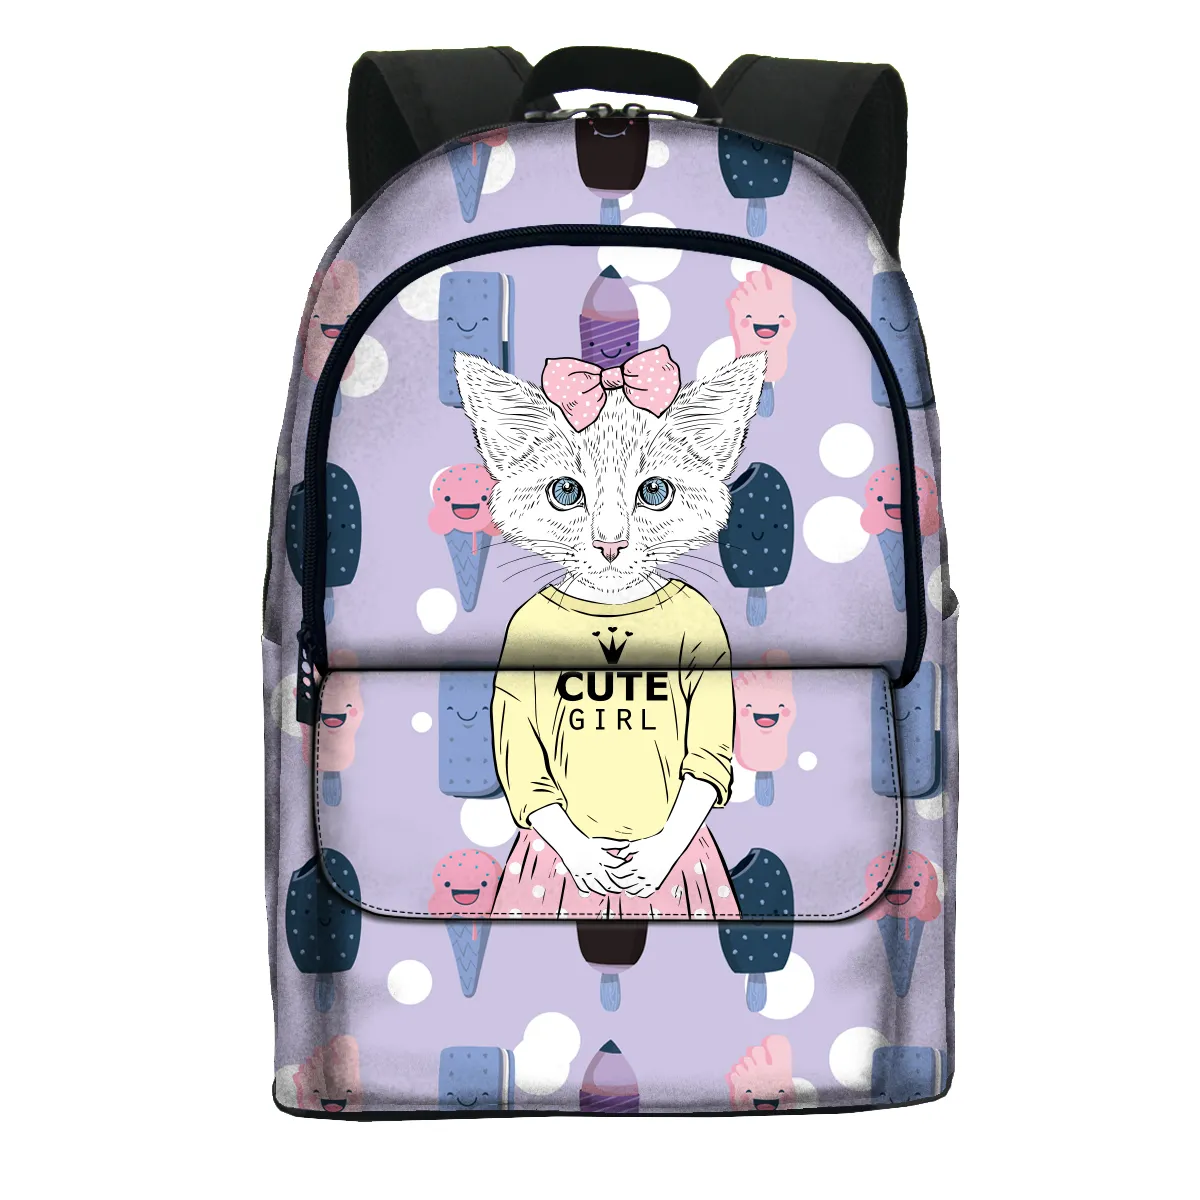 Tas sekolah SMA anak perempuan, tas sekolah ungu multifungsi motif kucing lucu Sac a Dos modis dan fungsional